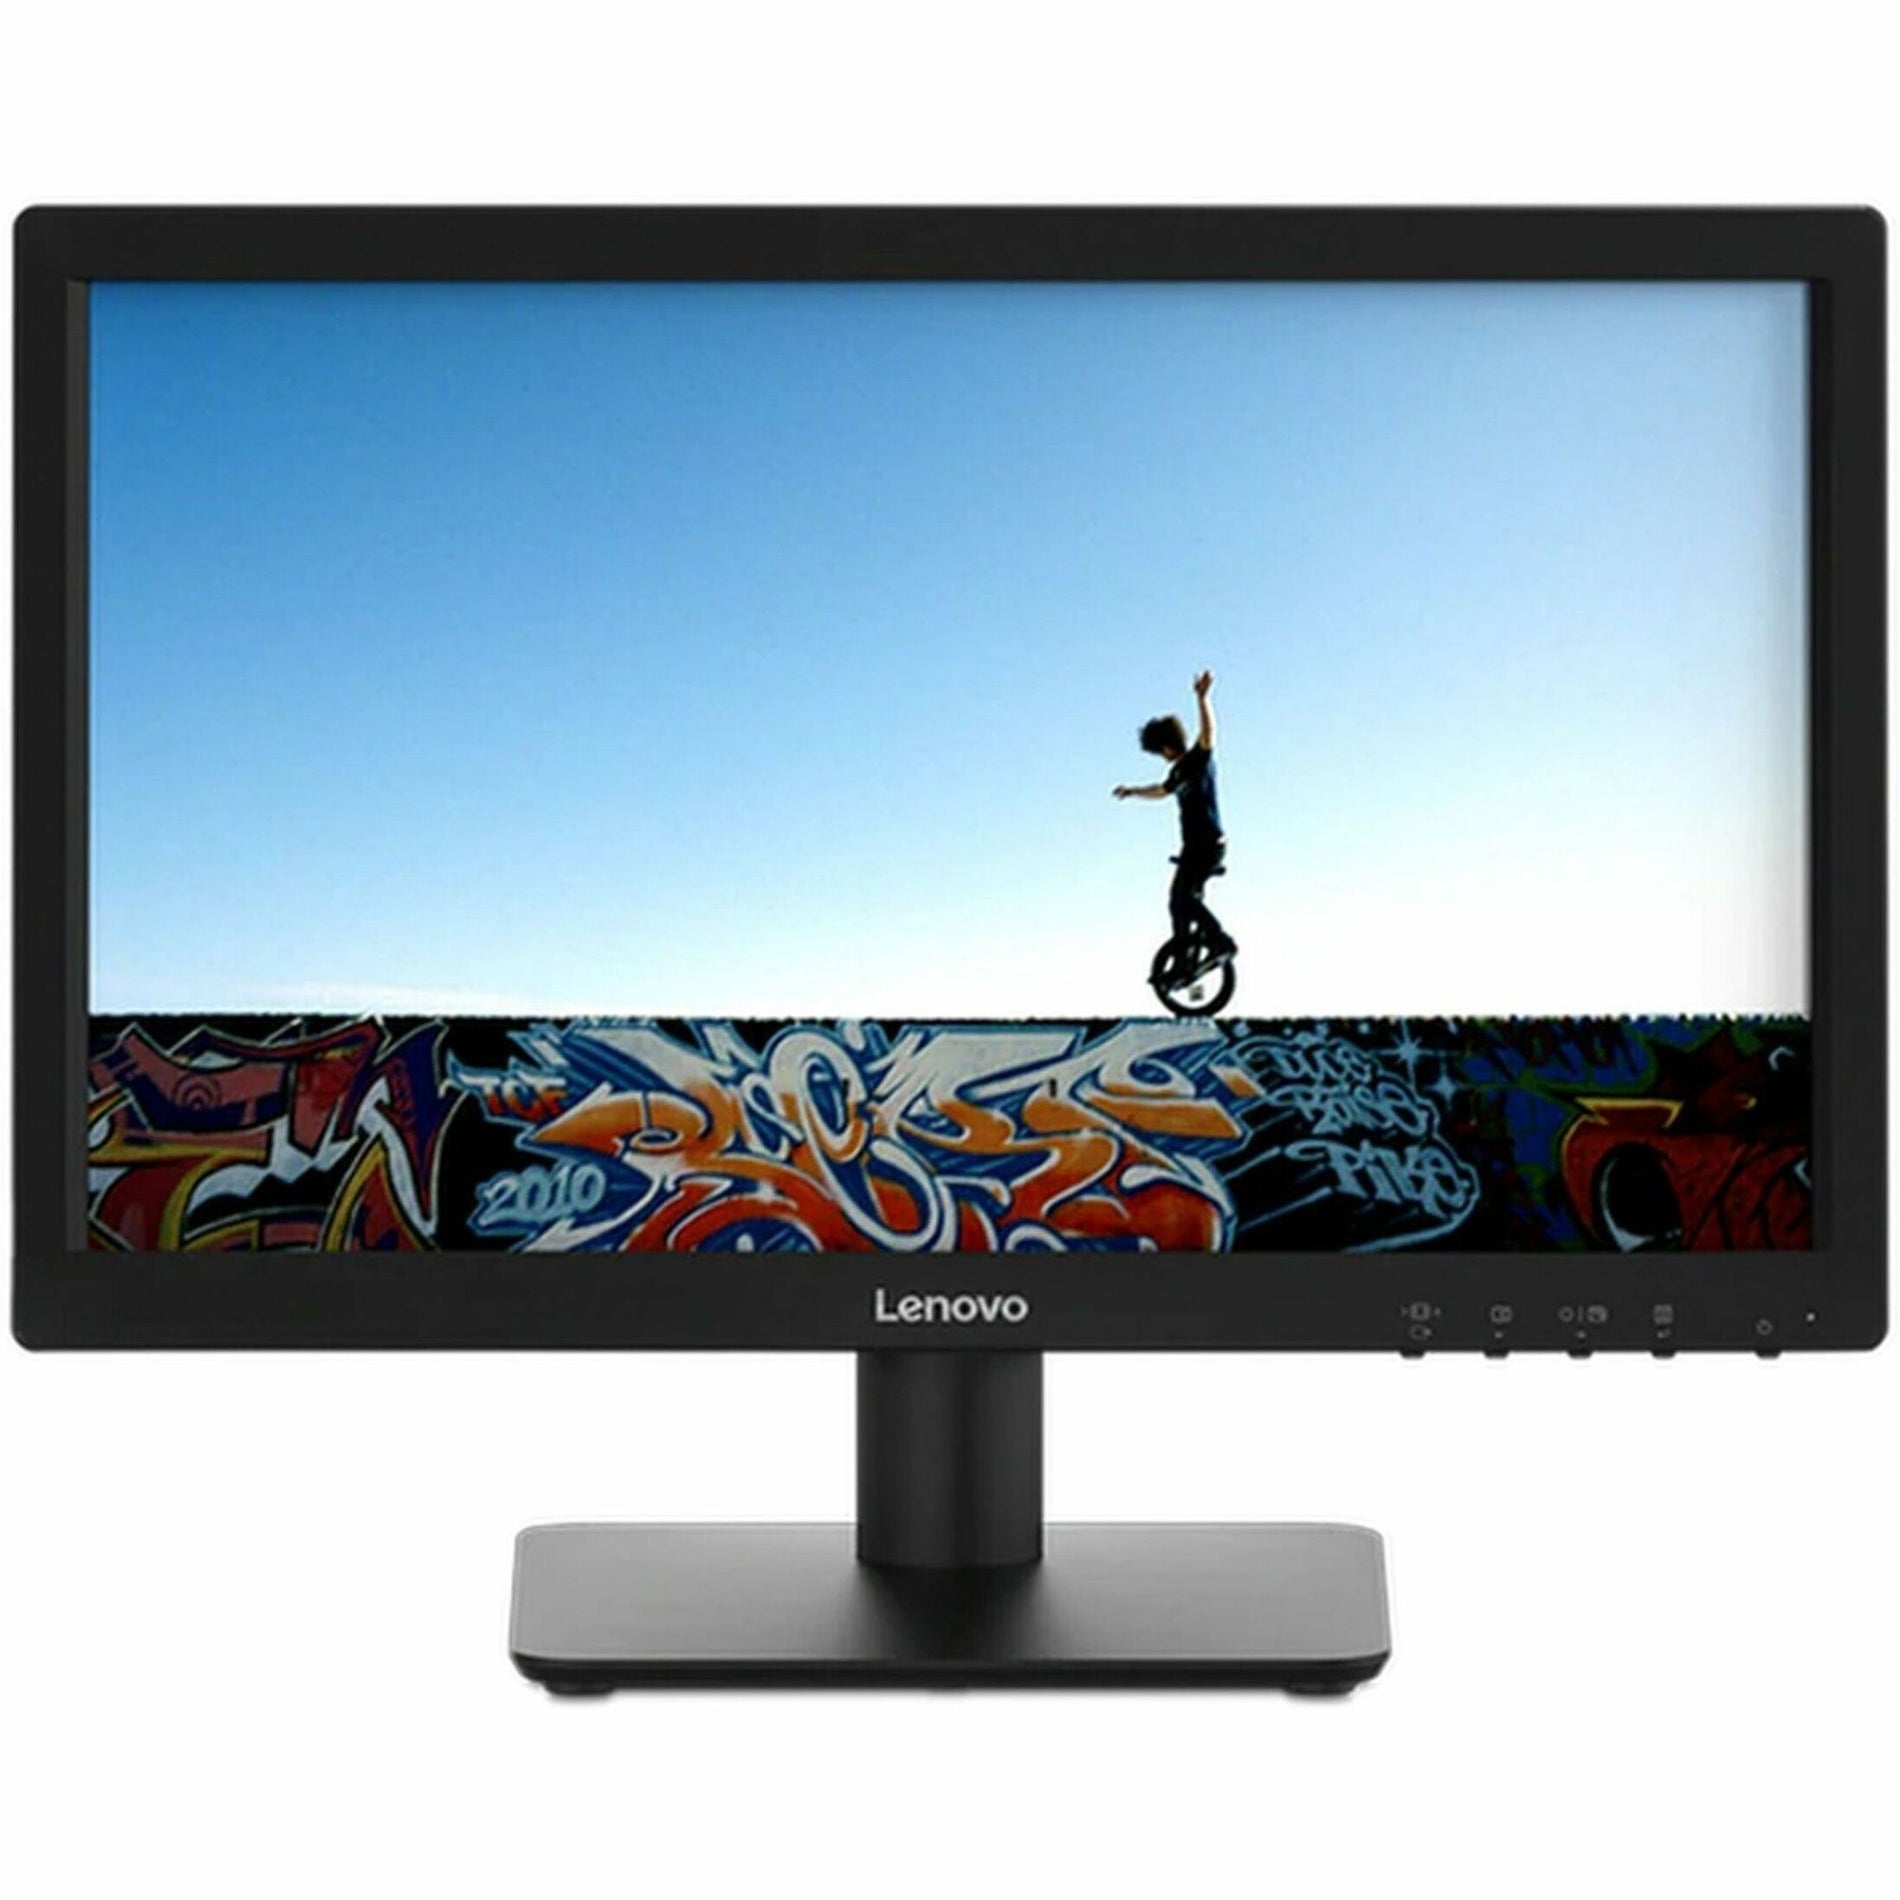 Lenovo 61E0KAR6US D19-10 Widescreen LCD Monitor, 18.5" WXGA, 16:9, 200 Nit, Black